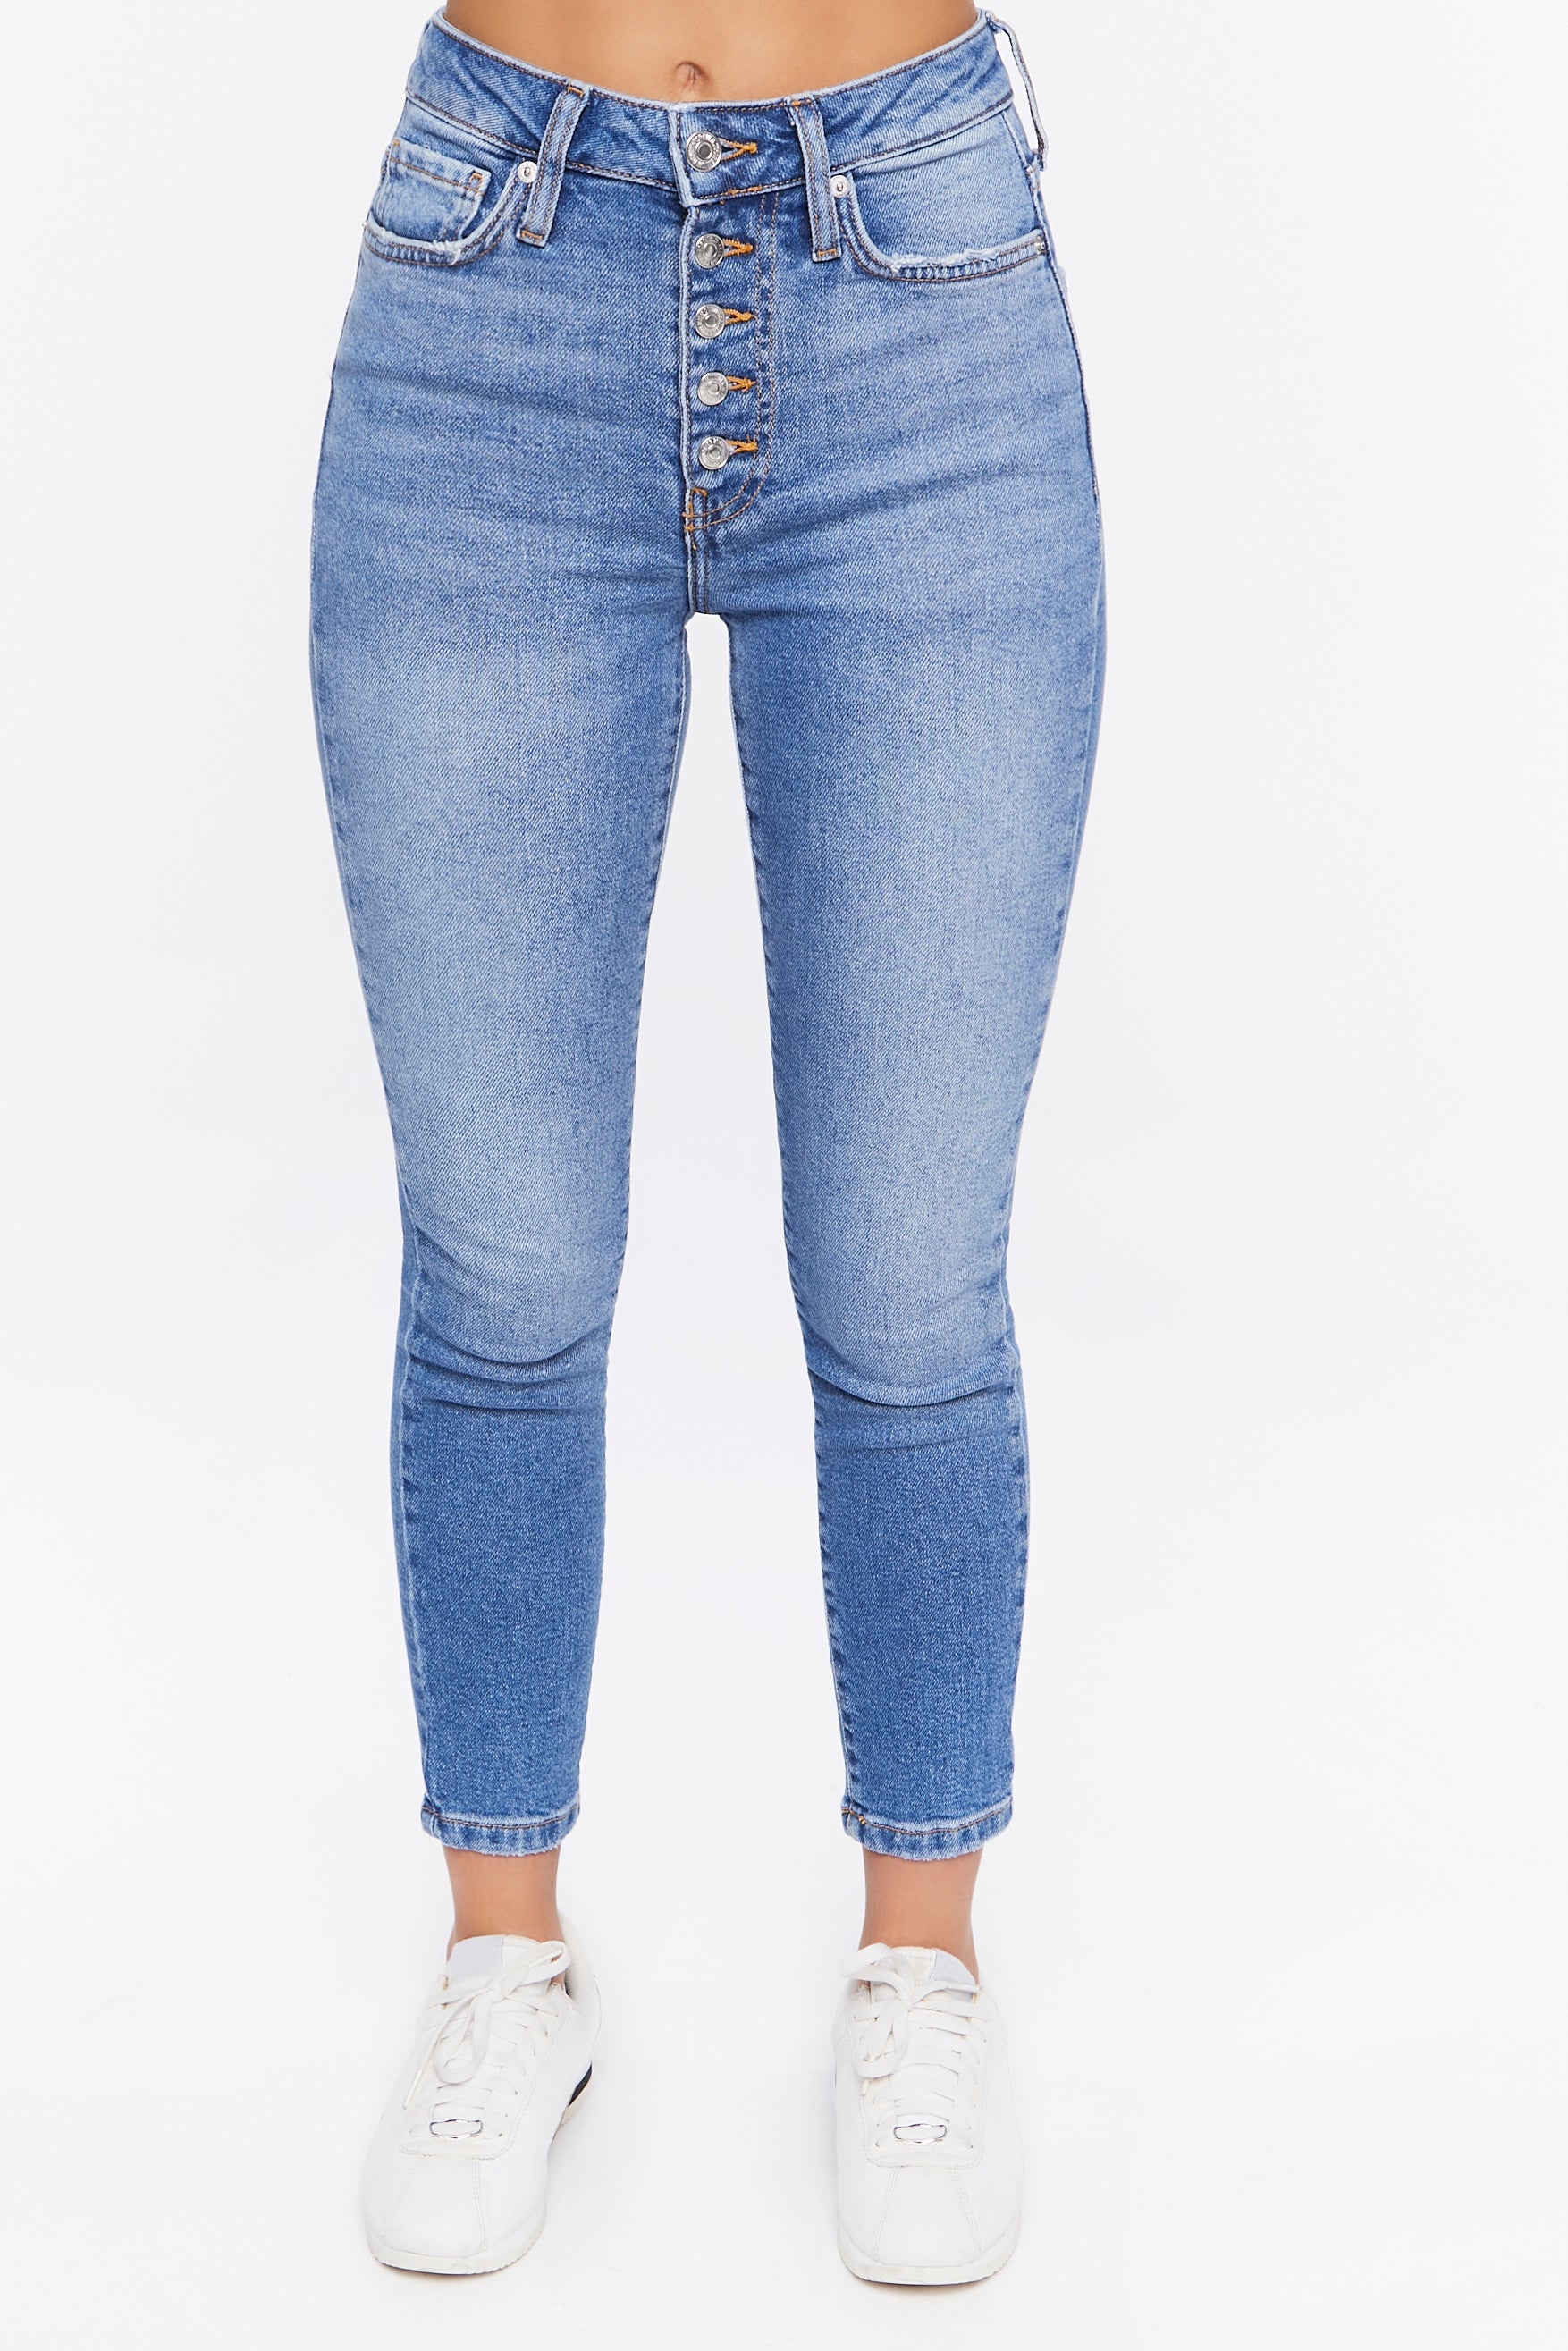 Mediumdenim Petite High-Rise Skinny Jeans 3